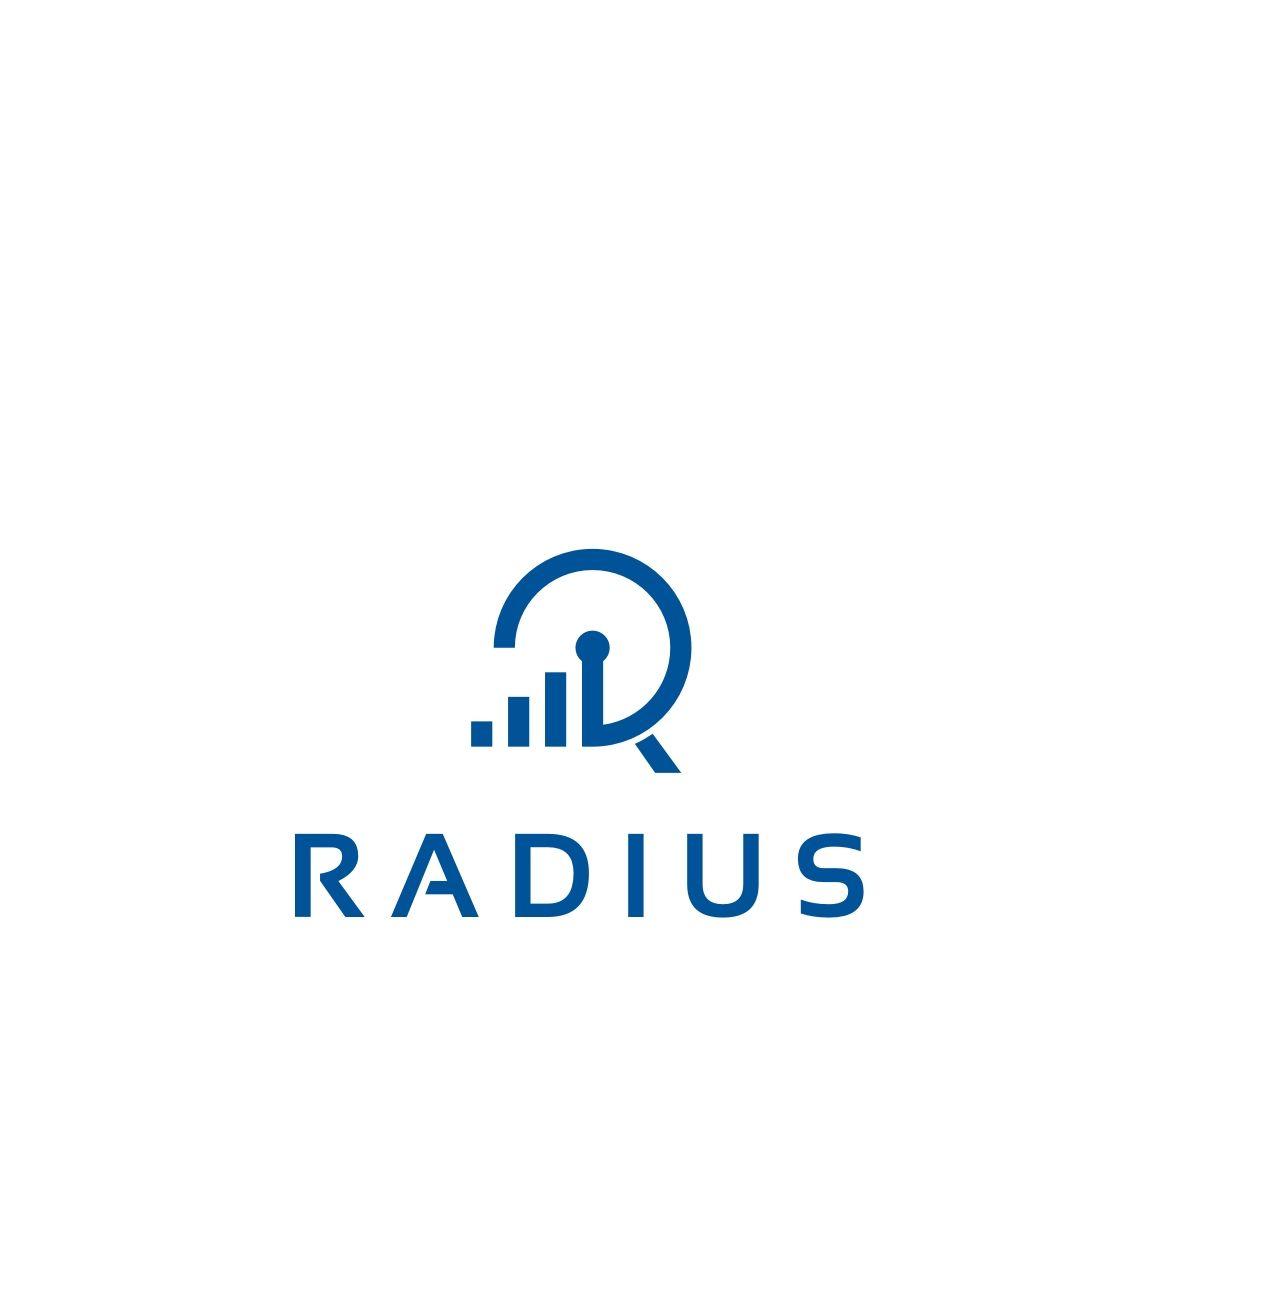 Radius Logo - Bold, Modern, Marketing Logo Design for Radius by derho | Design ...